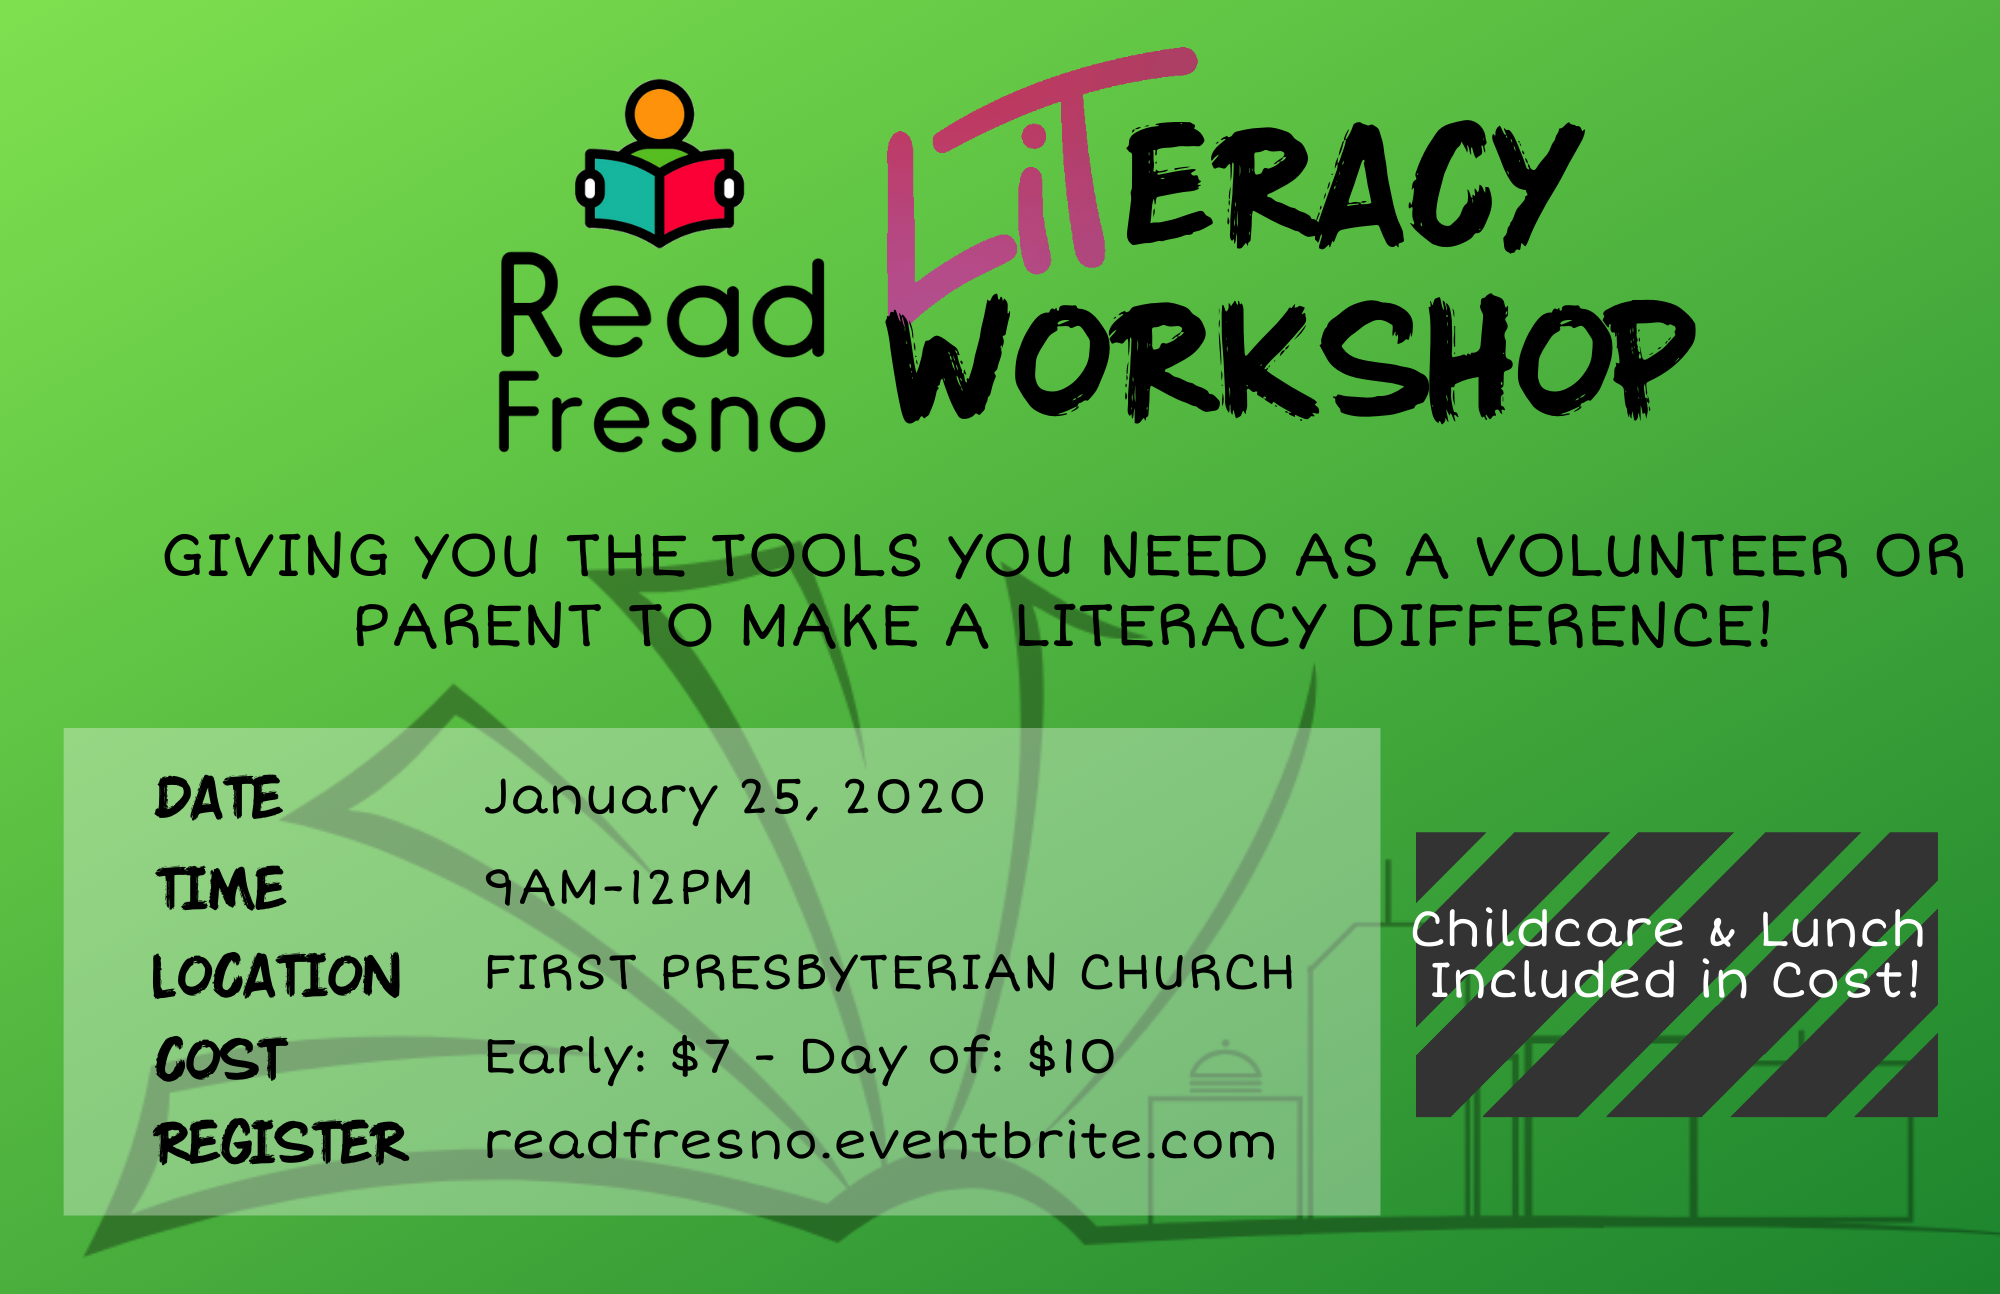 Read Fresno Workshop